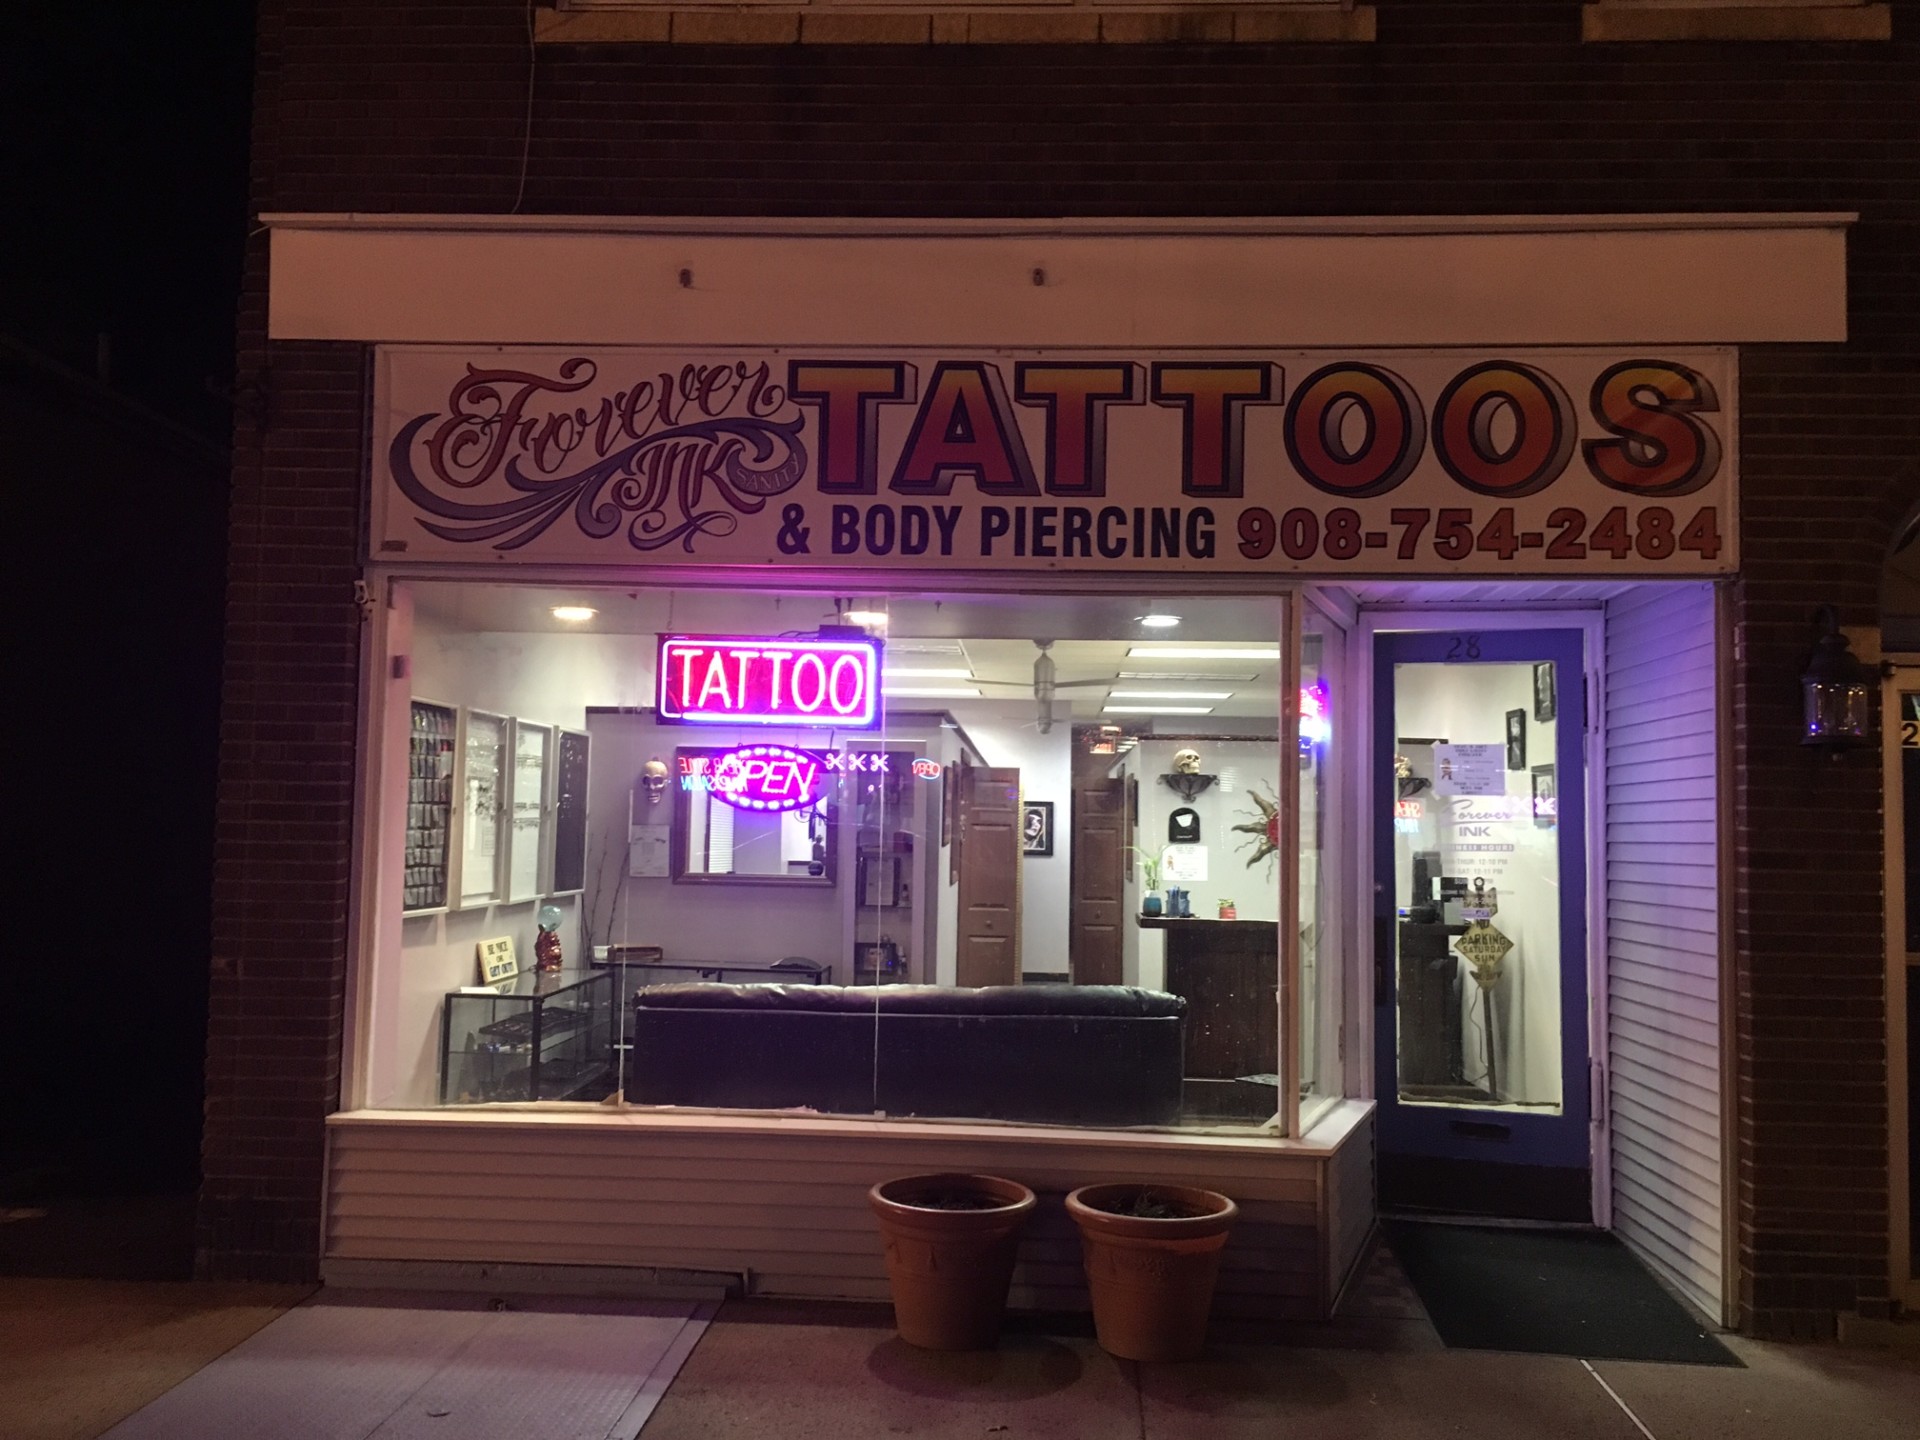 Forever Ink Tattoo & Body Piercings - Forever Inksanity - Tattoos & Body Piercings